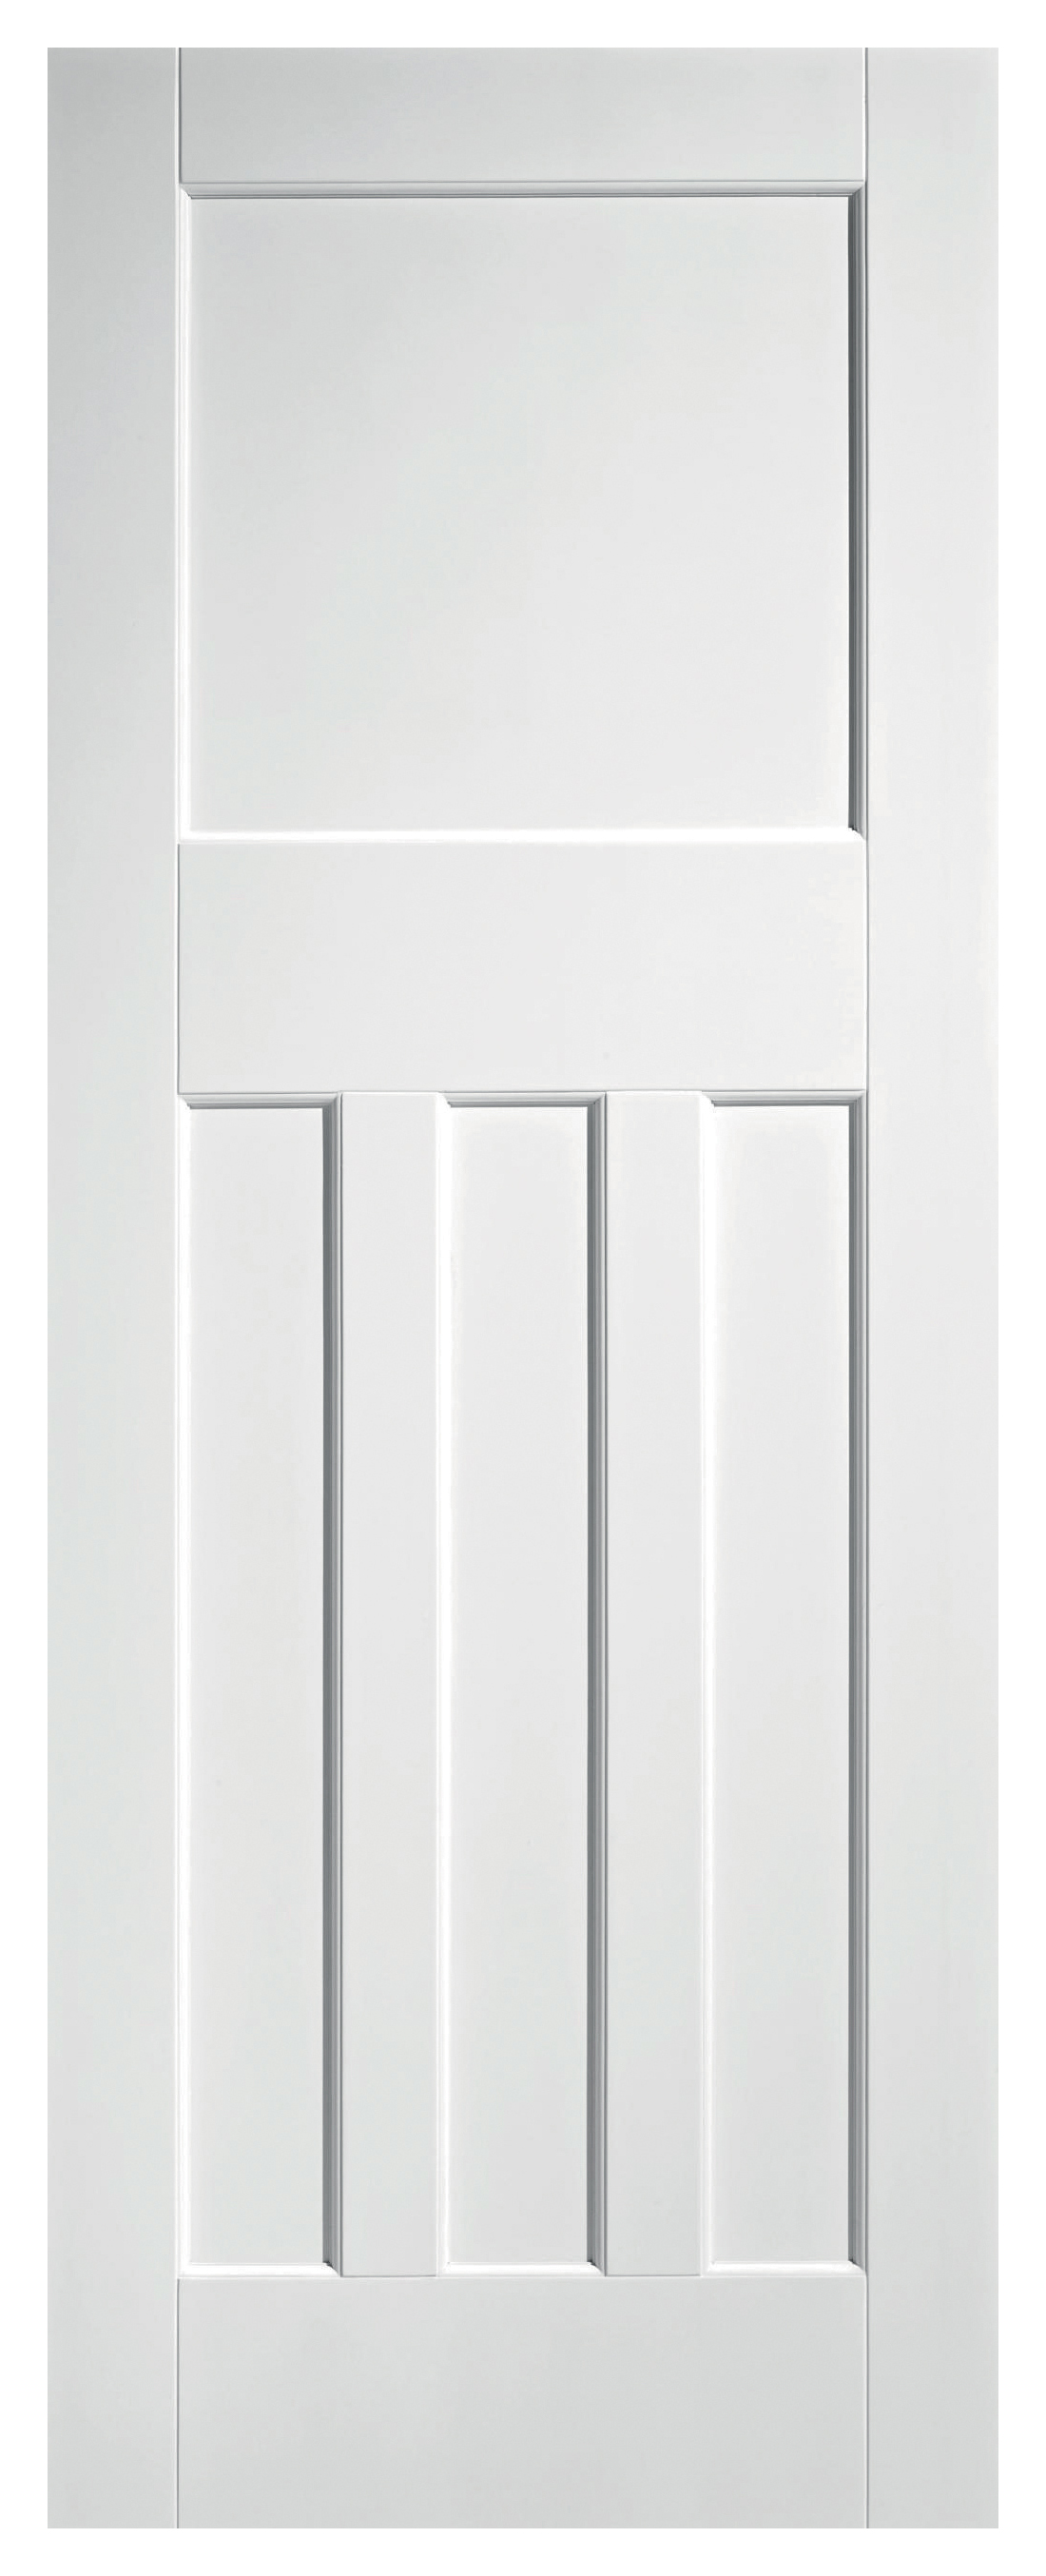 Image of LPD Internal DX 30s Primed White FD30 Fire Door - 726 x 2040mm